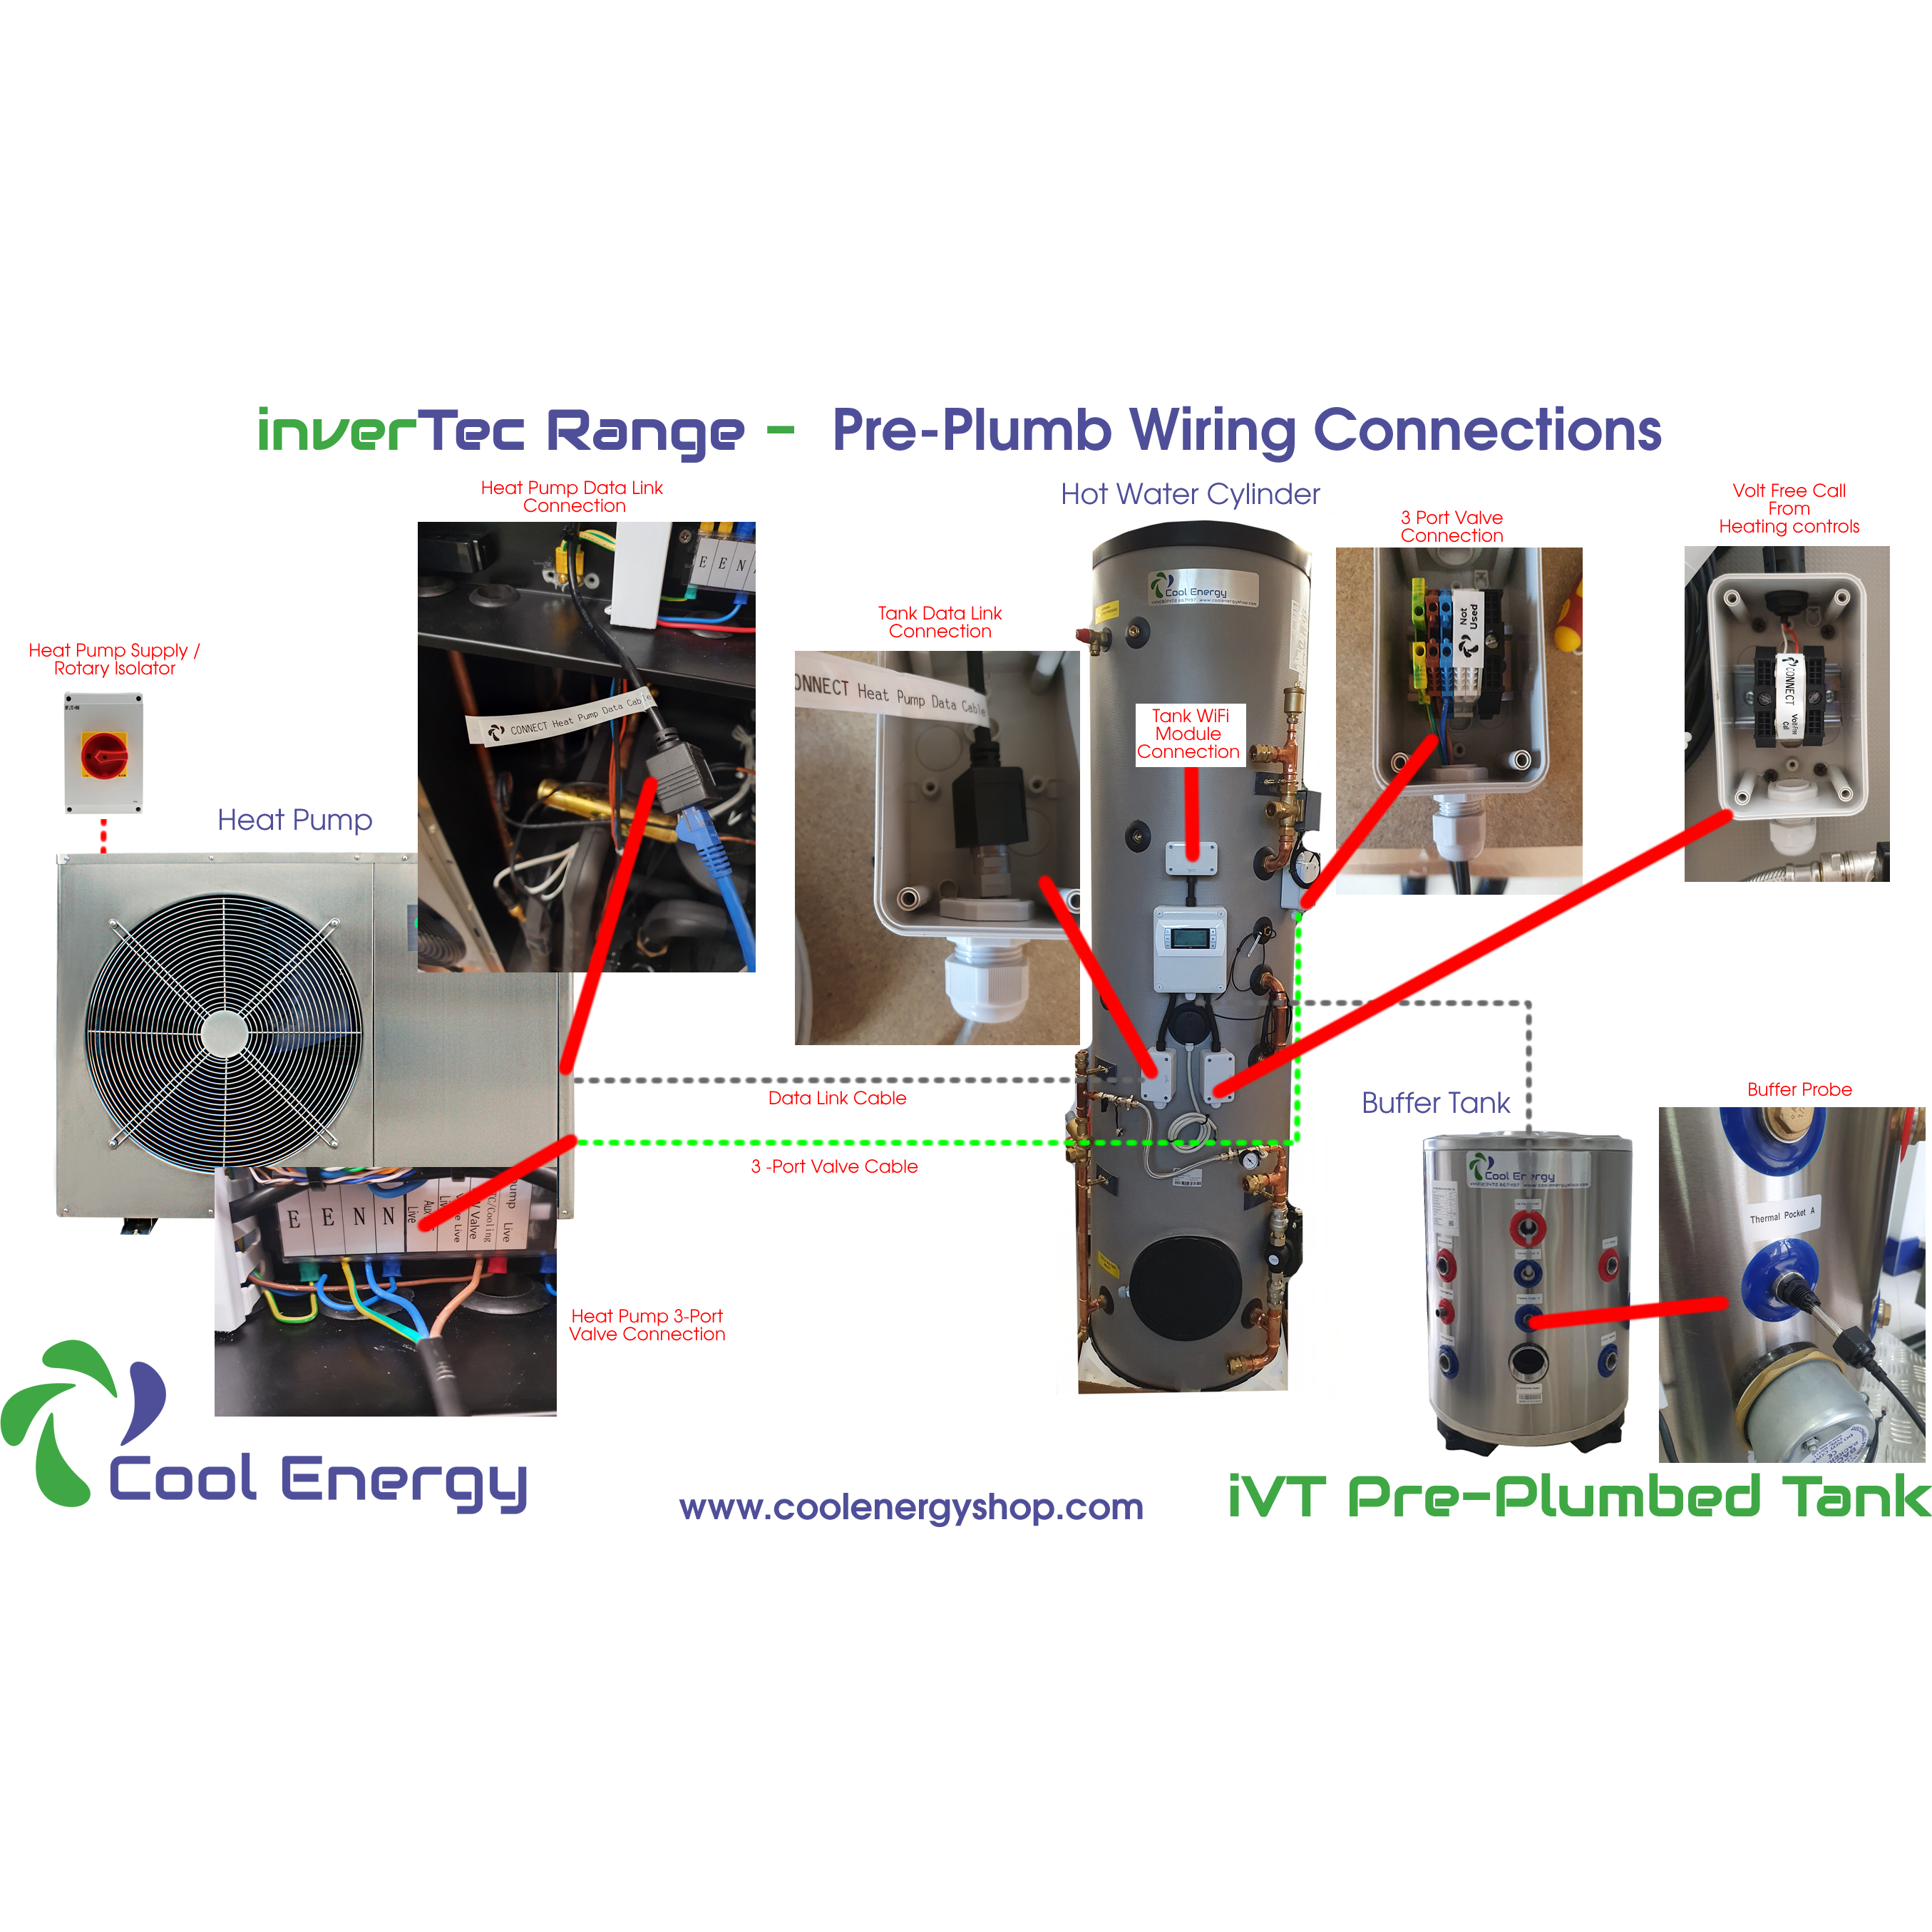 Cool Energy inverTech Heat Pump Package Builder - Heat Pump Packages - Cool Energy Shop